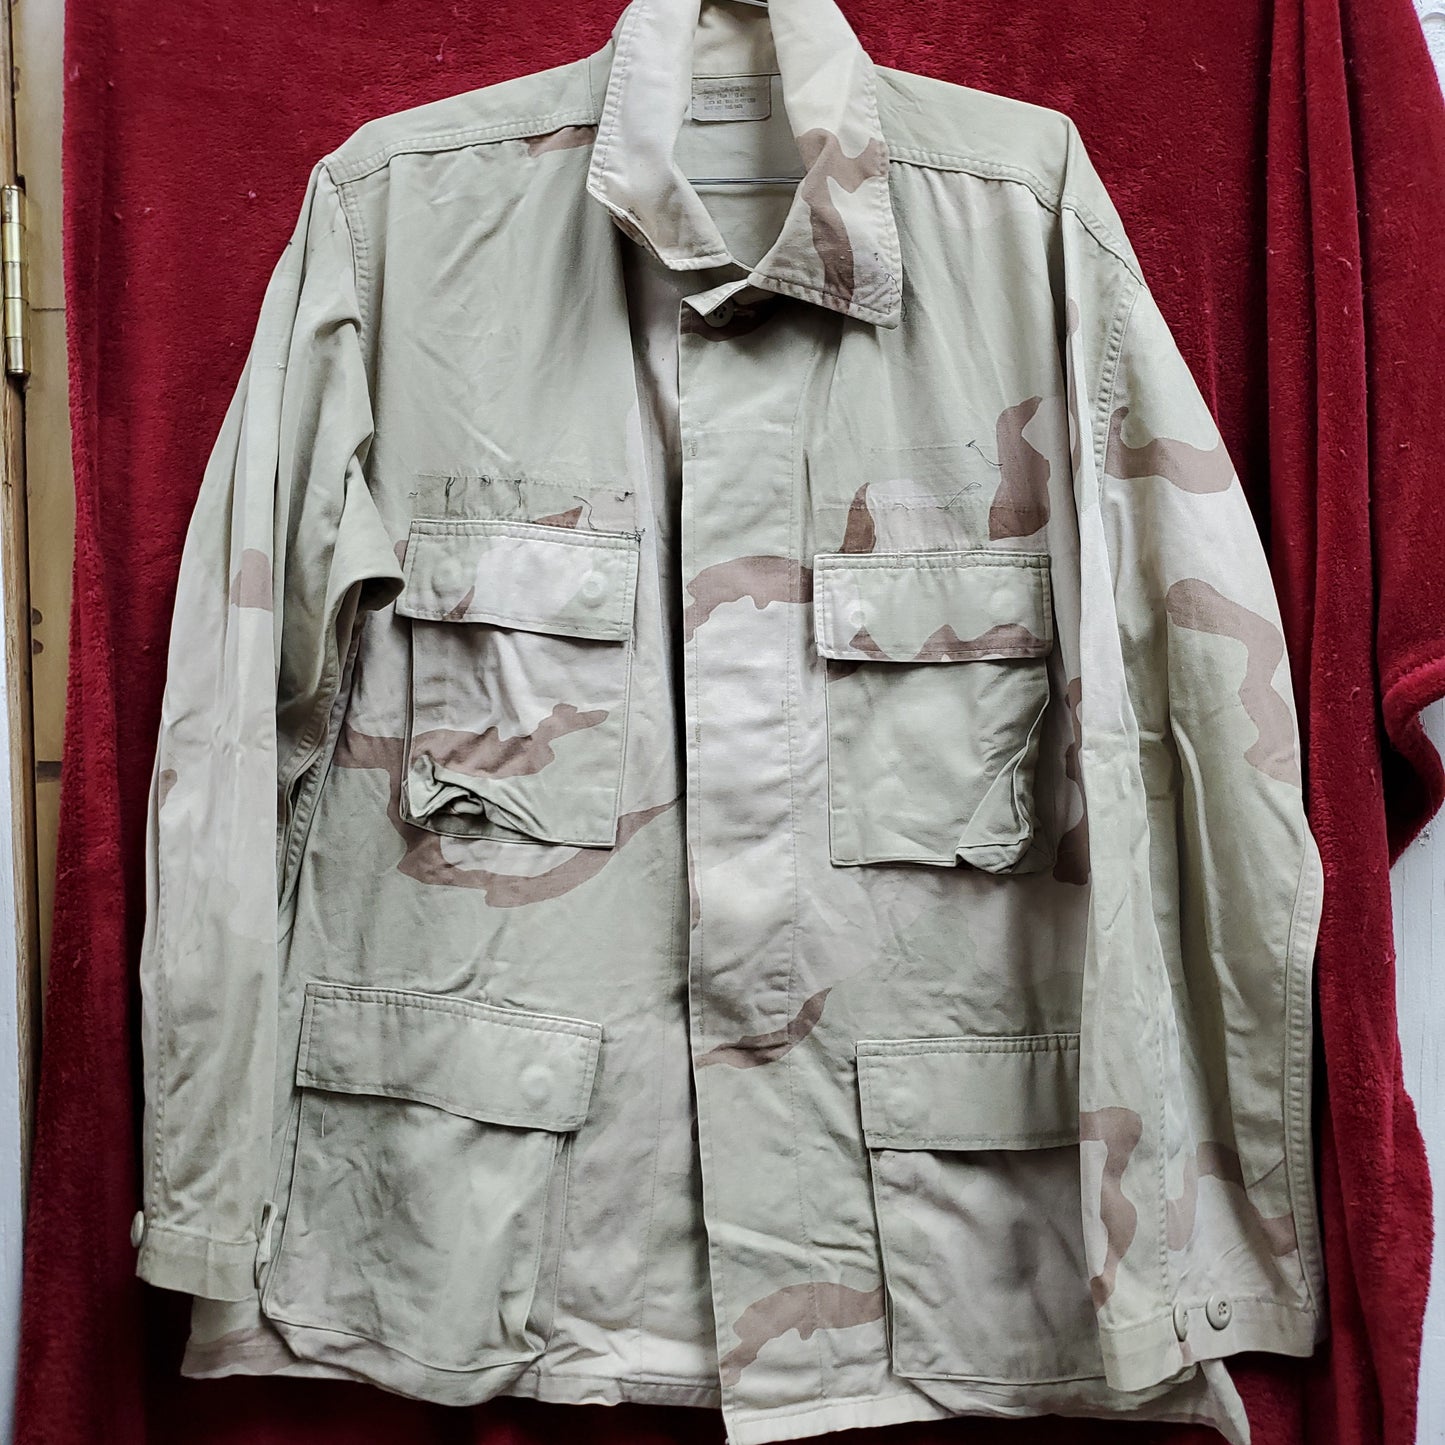 Medium Regular DCU Desert Camo Top Jacket Uniform (25a85)